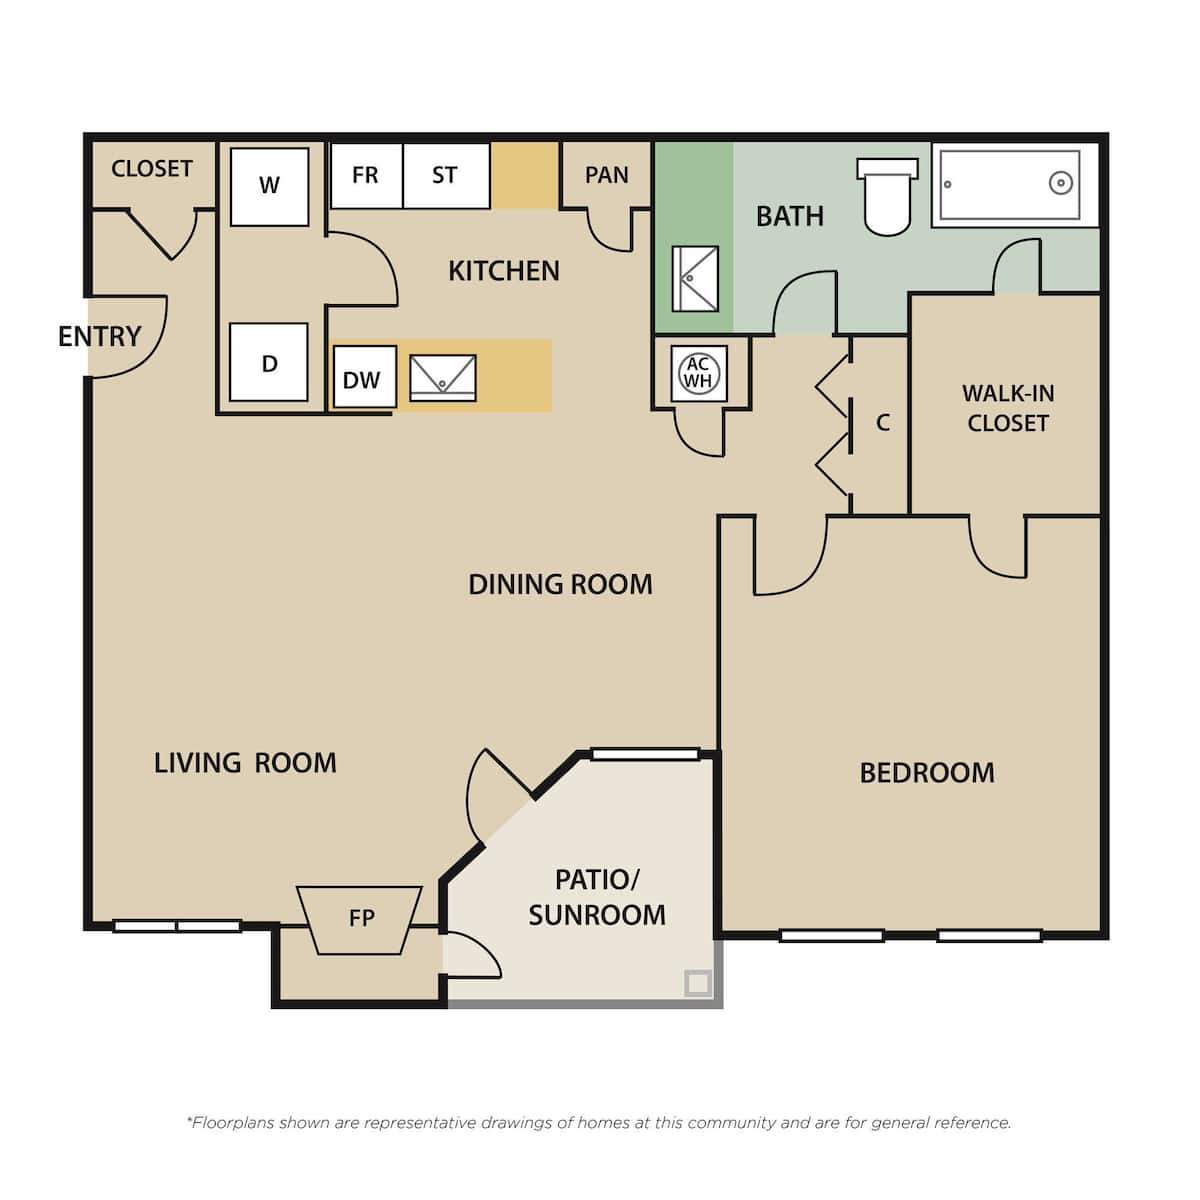 Floorplan diagram for PARK A3, showing 1 bedroom